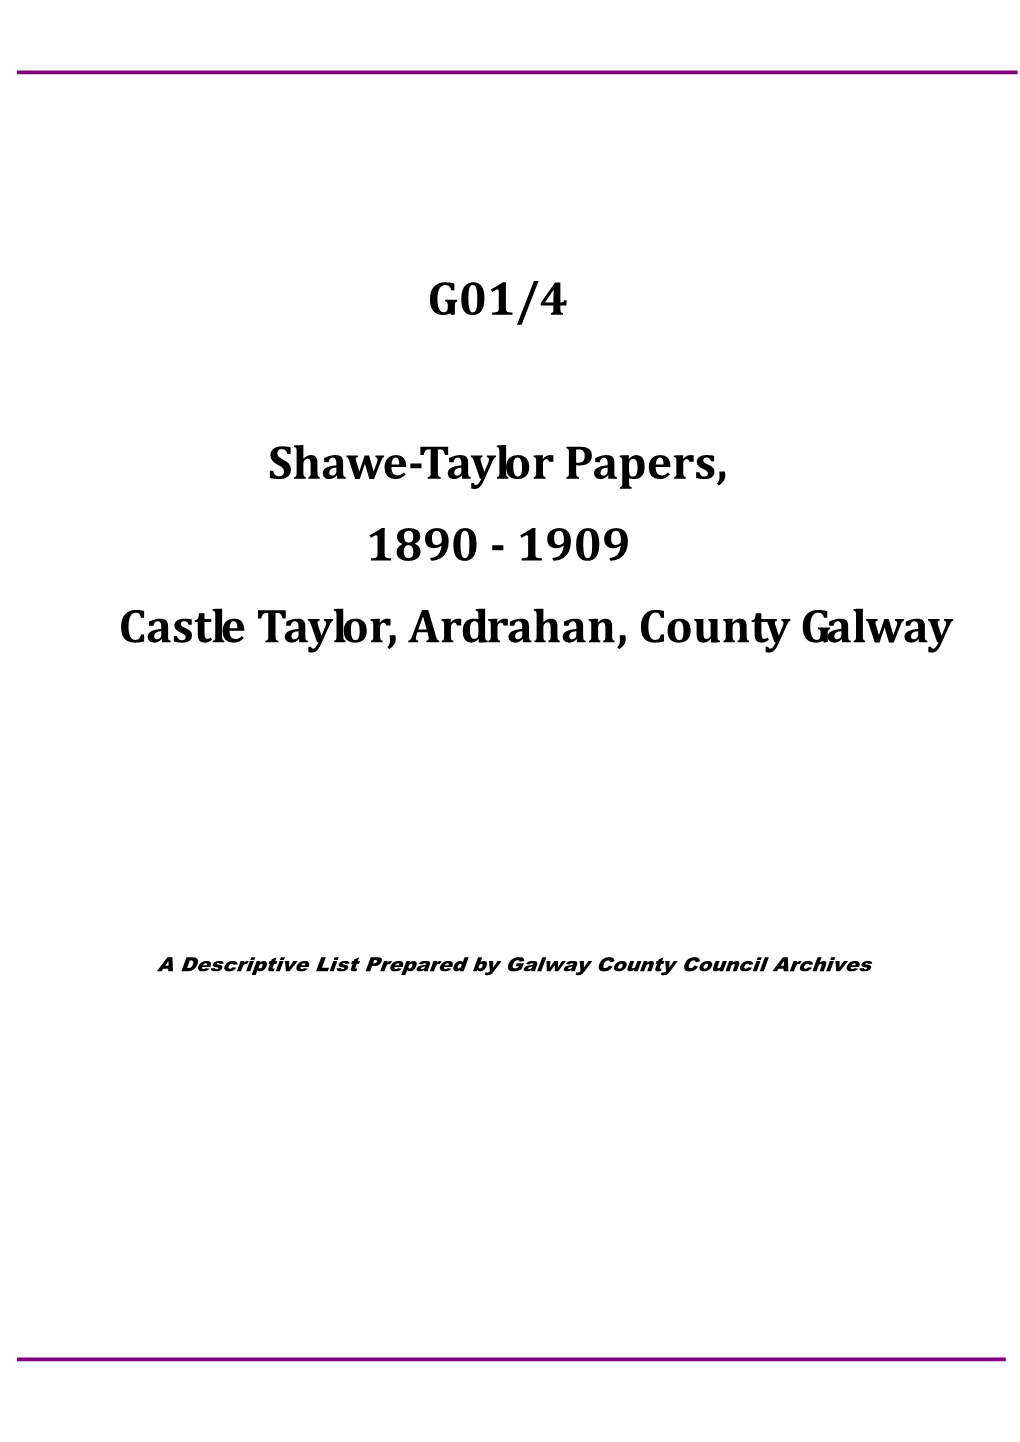 G01/4 Shawetaylor Papers, 1890 1909 Castle Taylor, Ardrahan